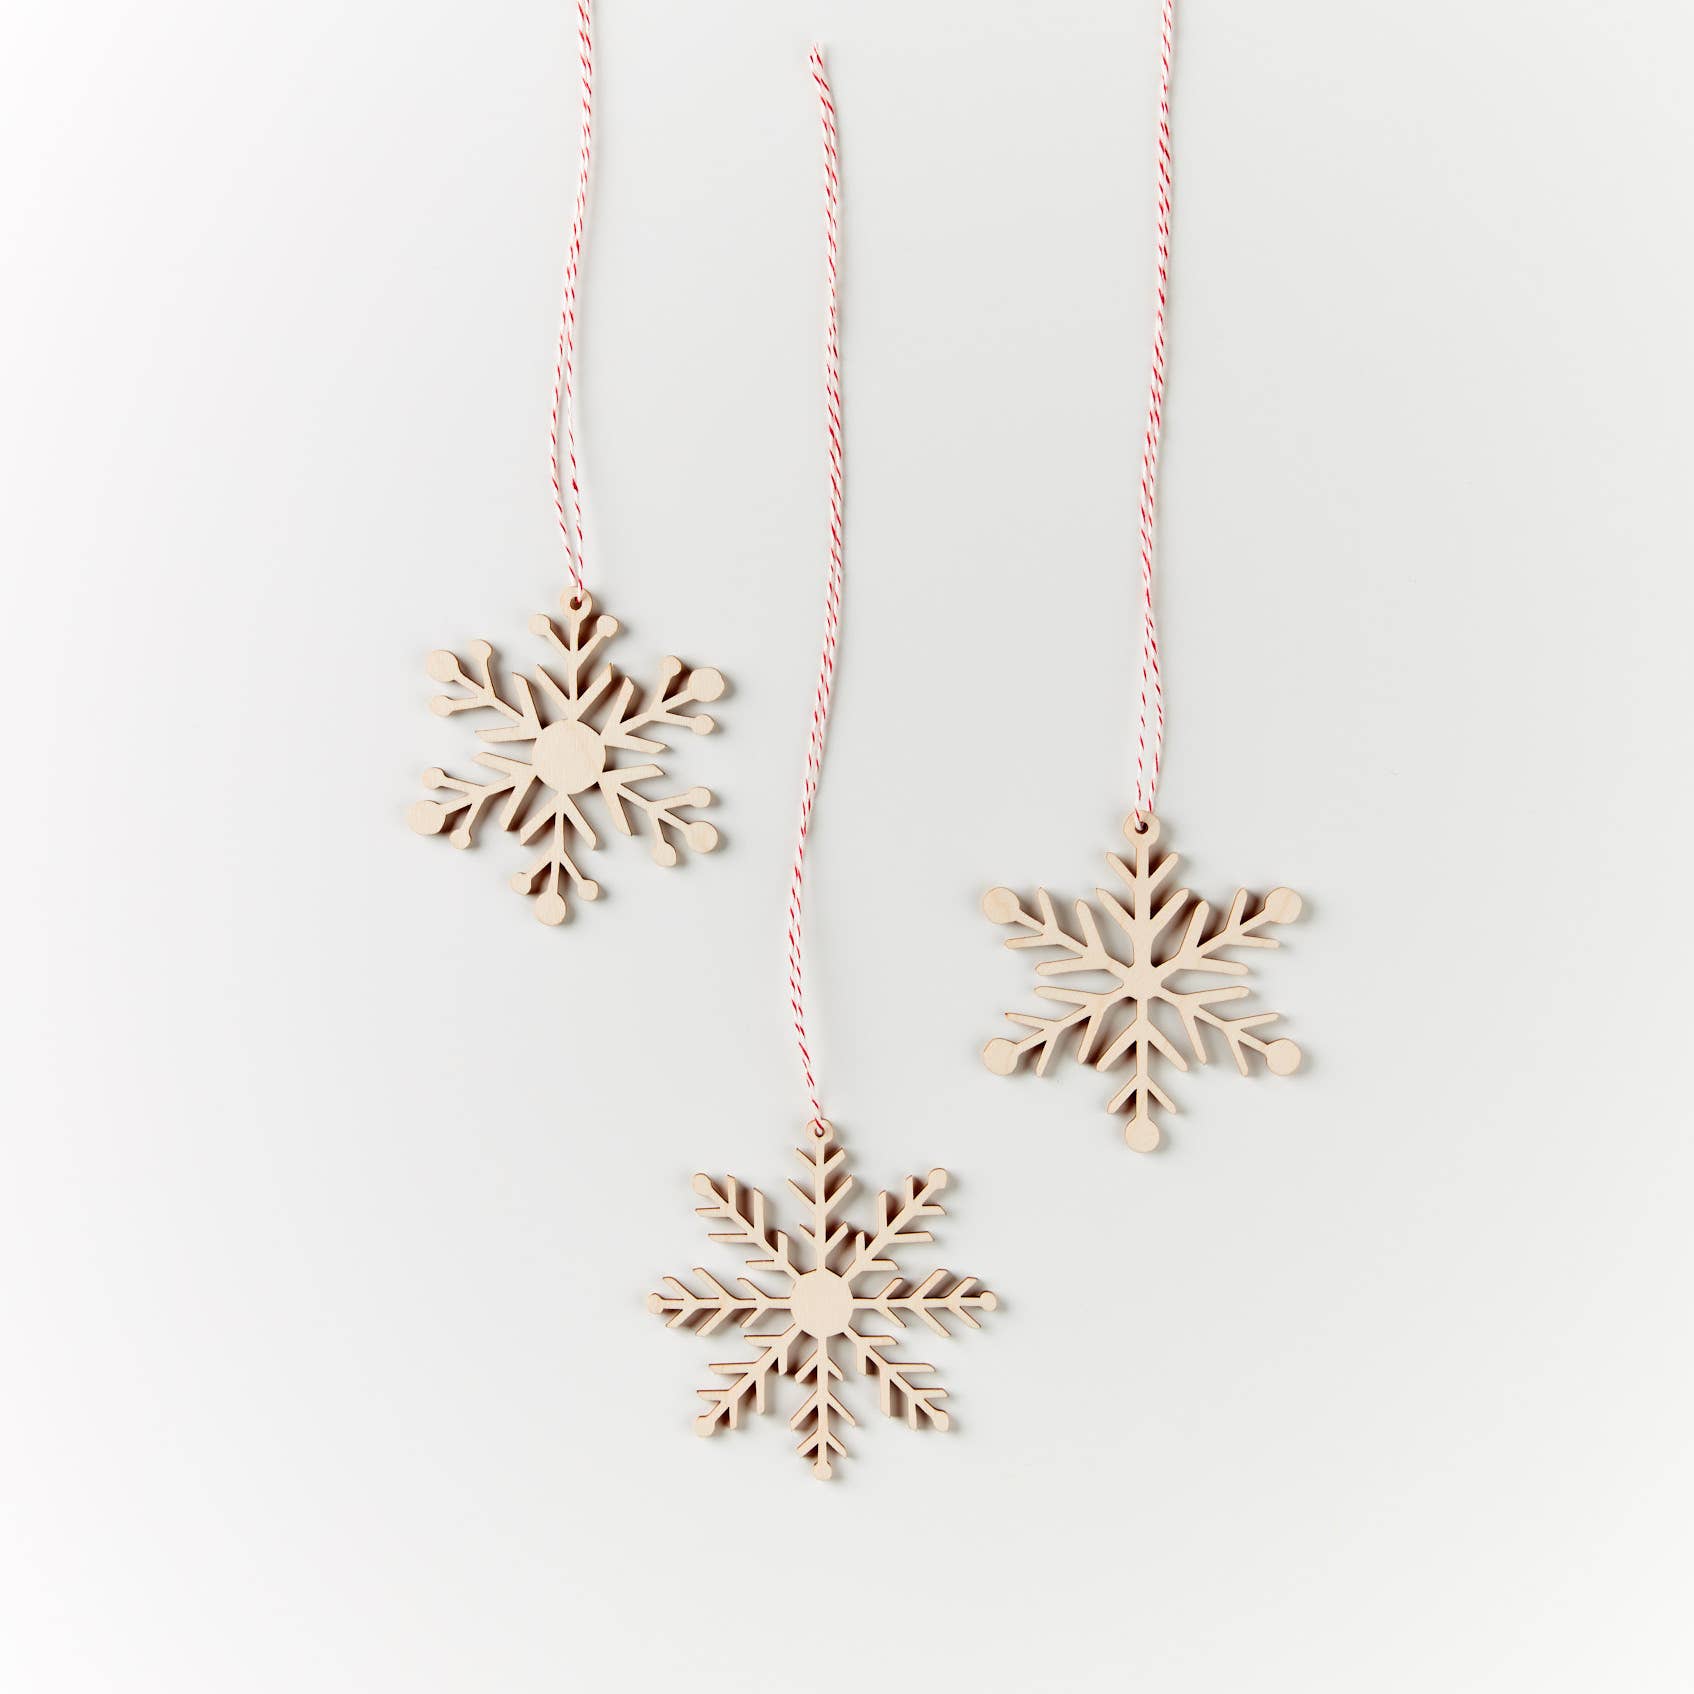 Simple Snowflake Ornaments